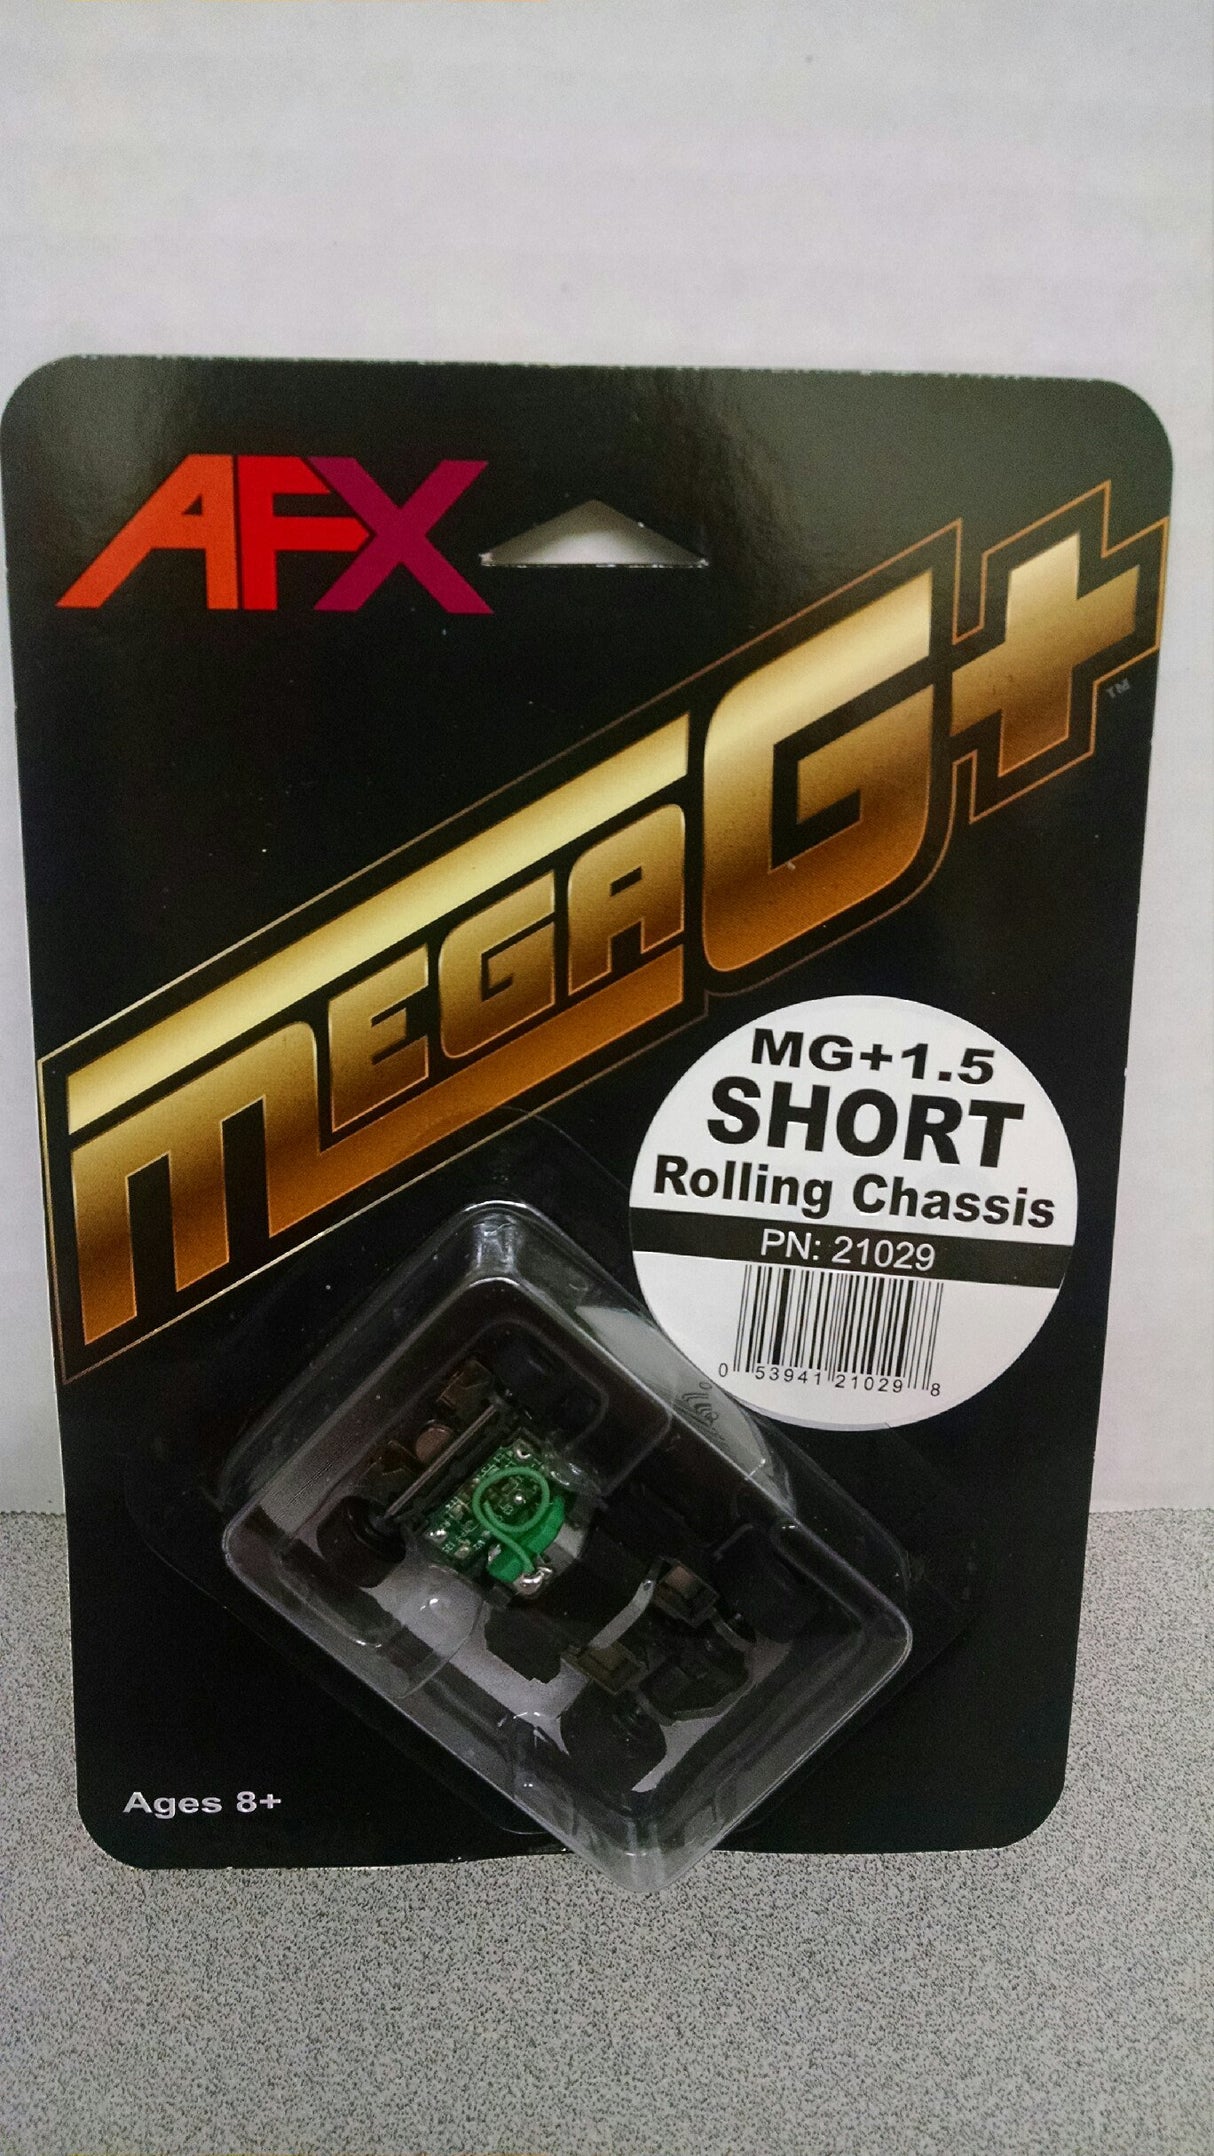 Sleek AFX Mega-G+ short 1.5 in wheelbase roll chassis, designed for high-performance slot car racing.